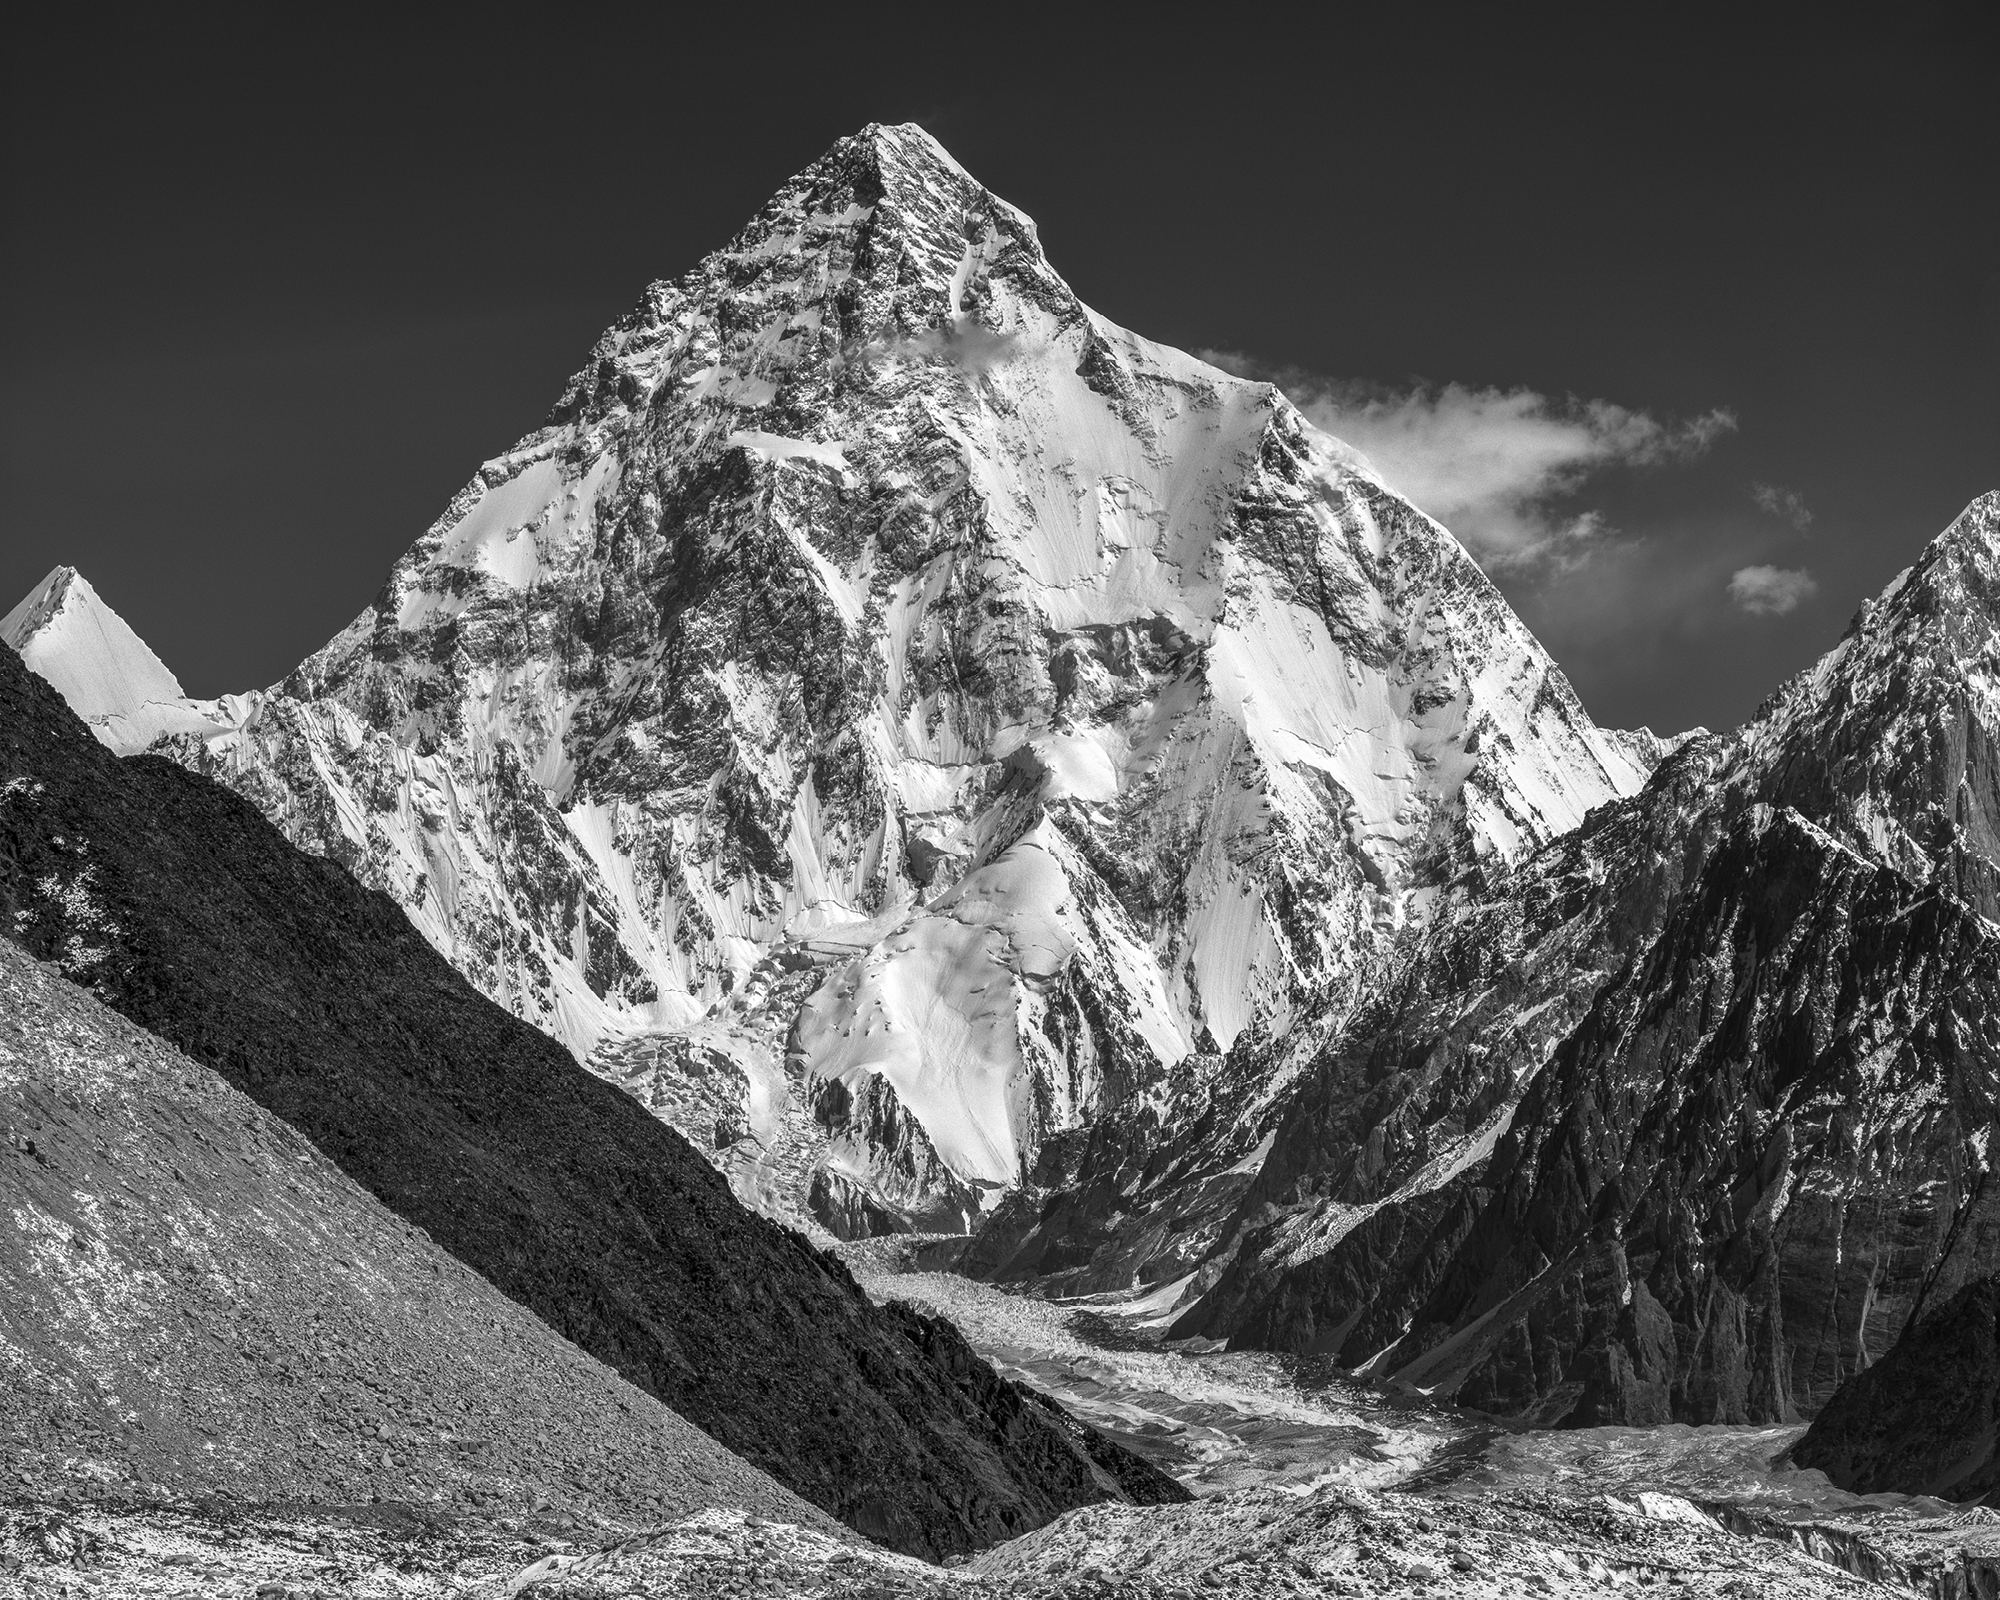 The Godwin-Austen Glacier in Pakistan’s Karakoram range